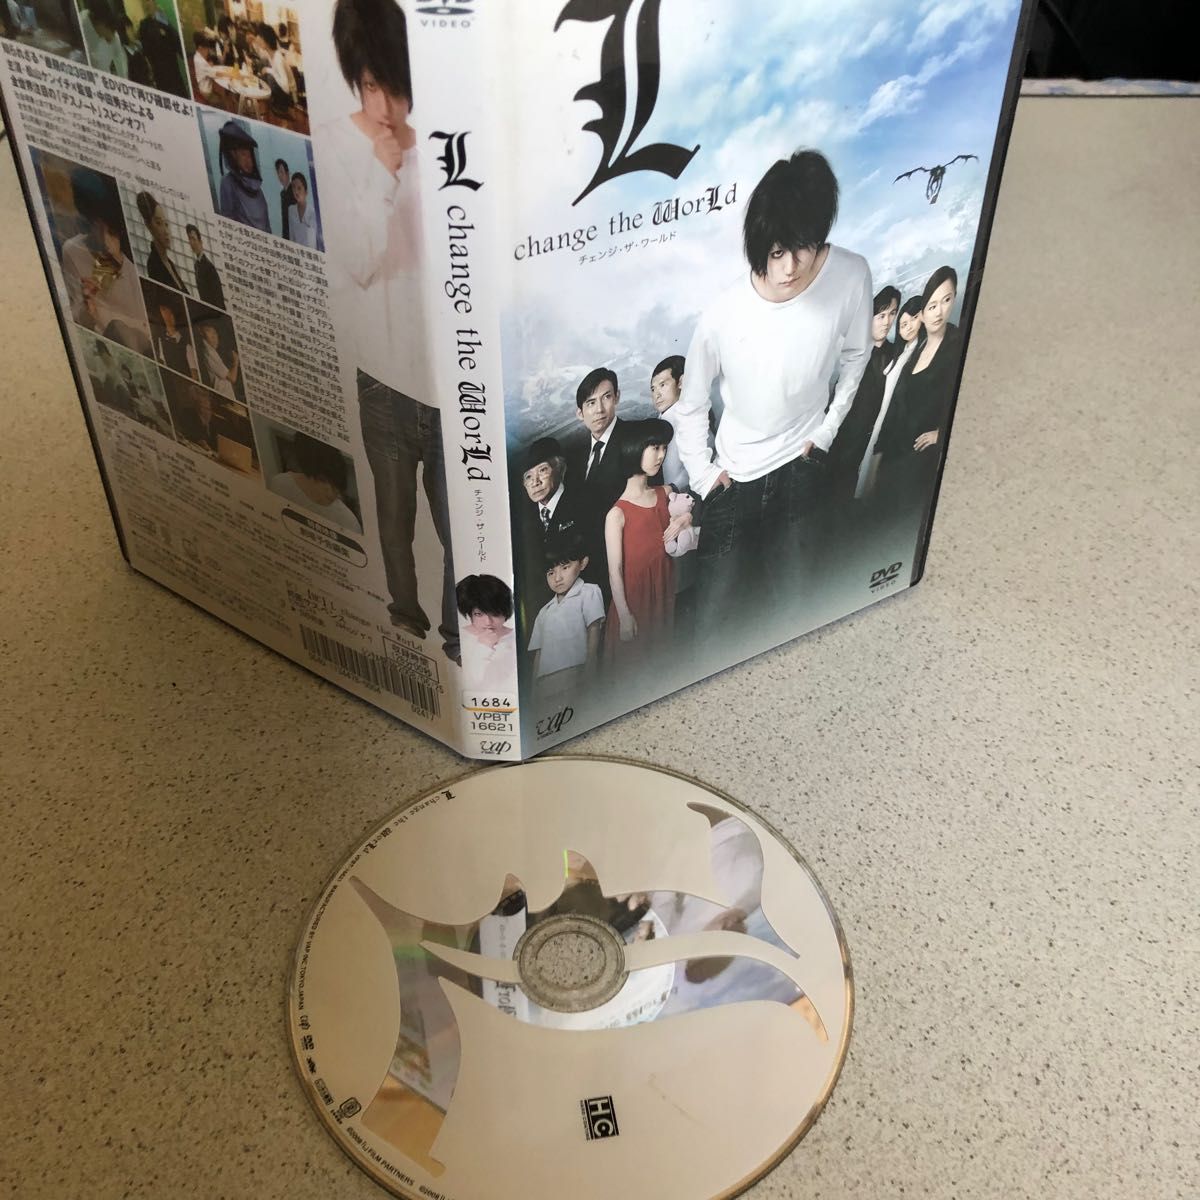 L change the worLd チェンジザワールド DVD